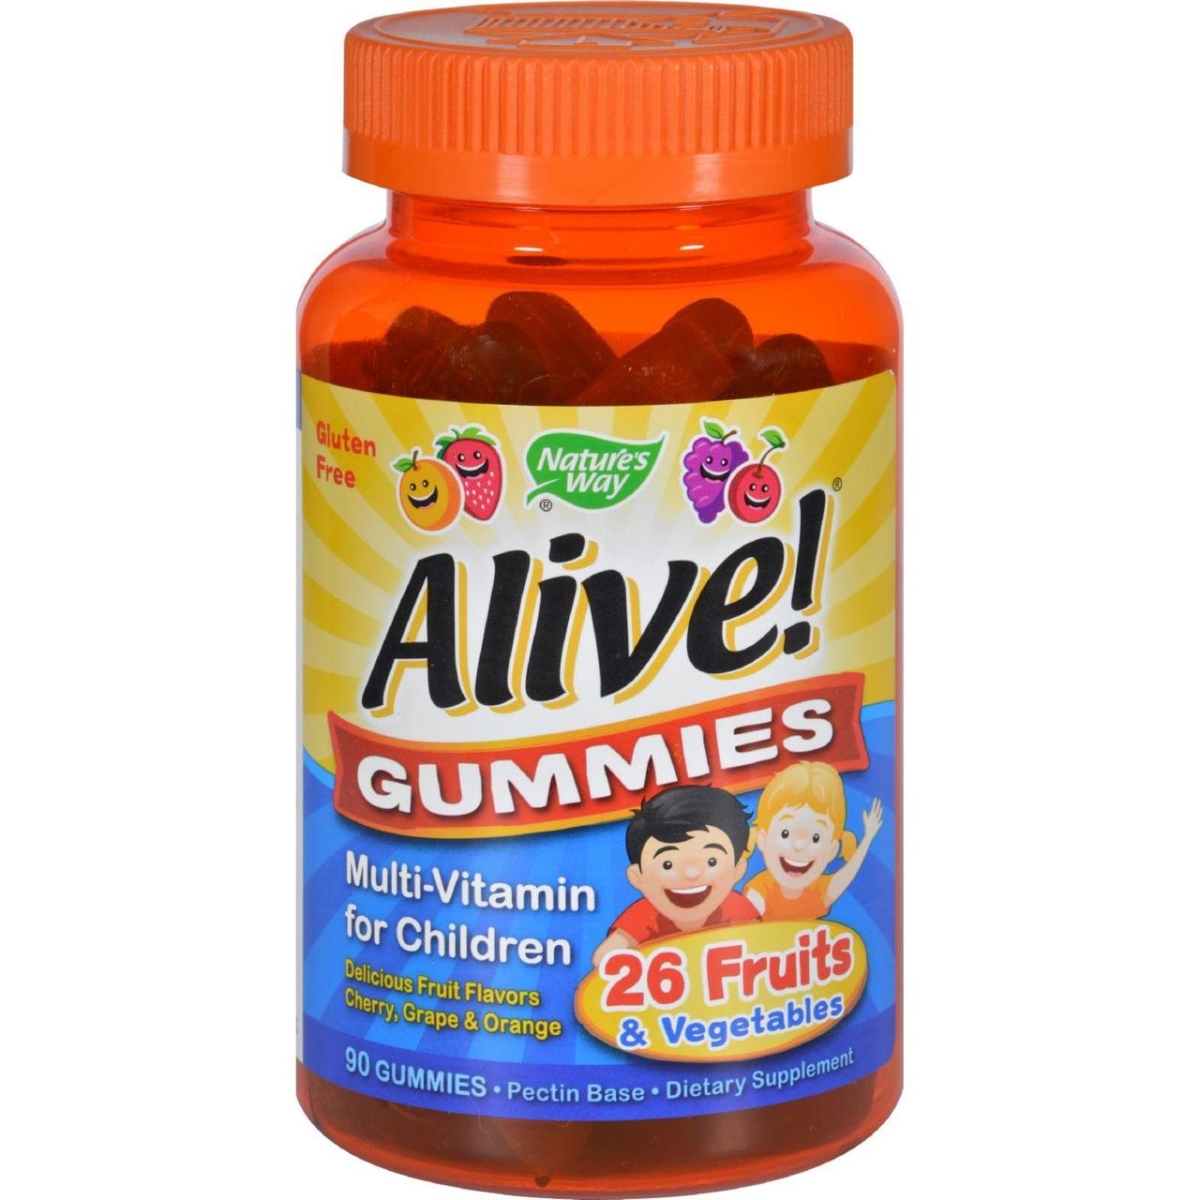 Hg1131275 Alive Gummies Multi-vitamin For Children Natural Cherry, Grape & Orange - 90 Gummies